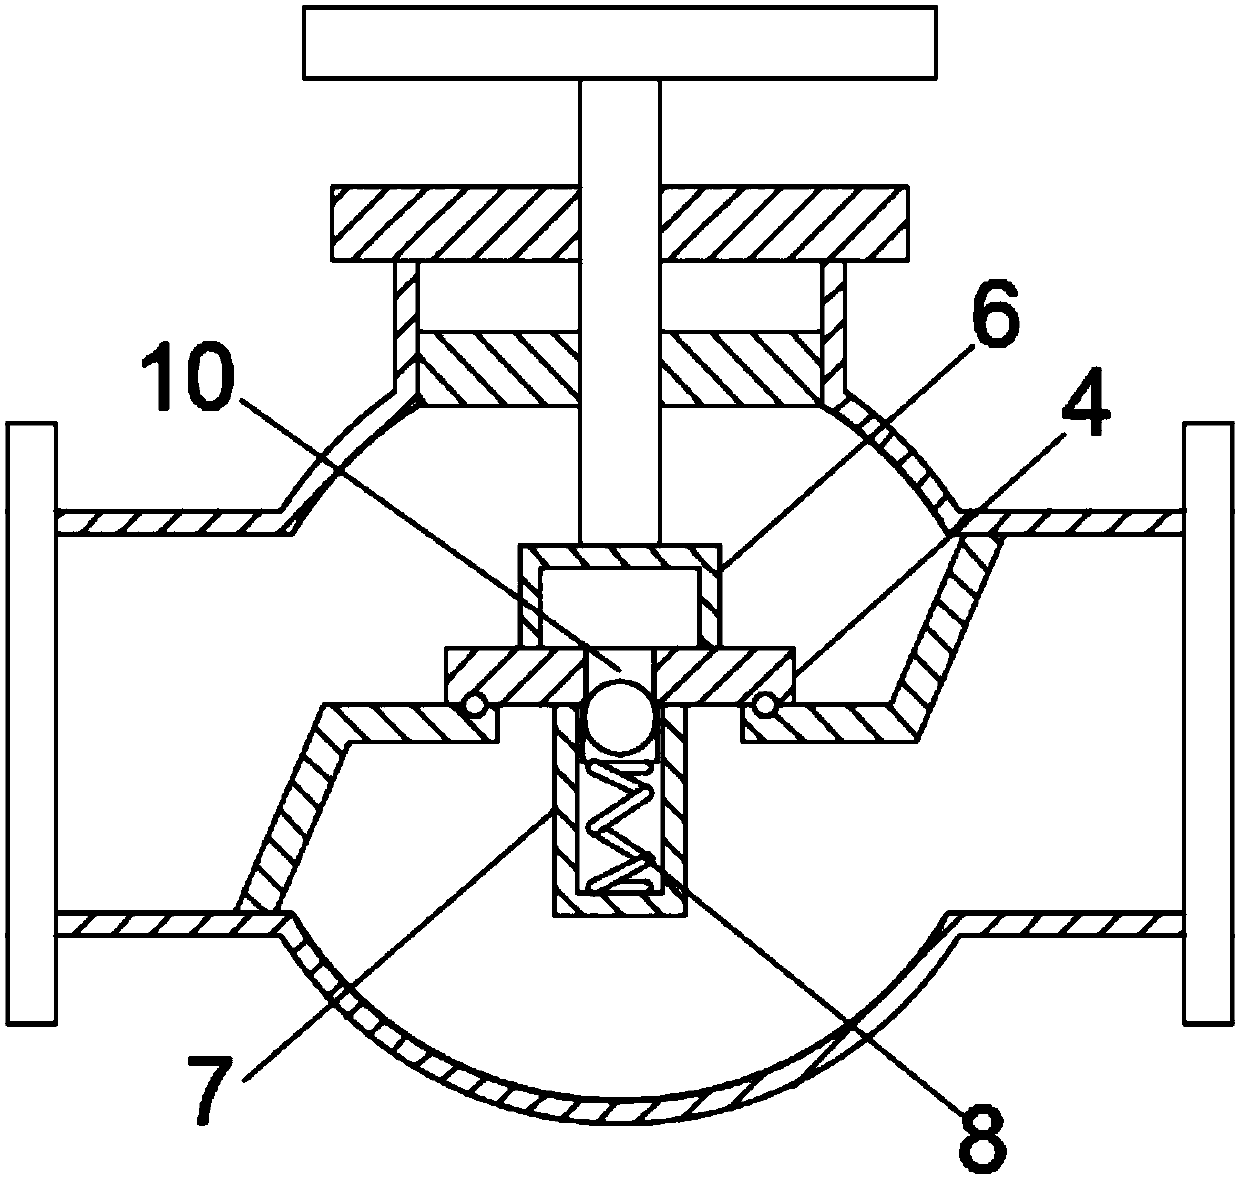 Constant-pressure hydraulic control valve